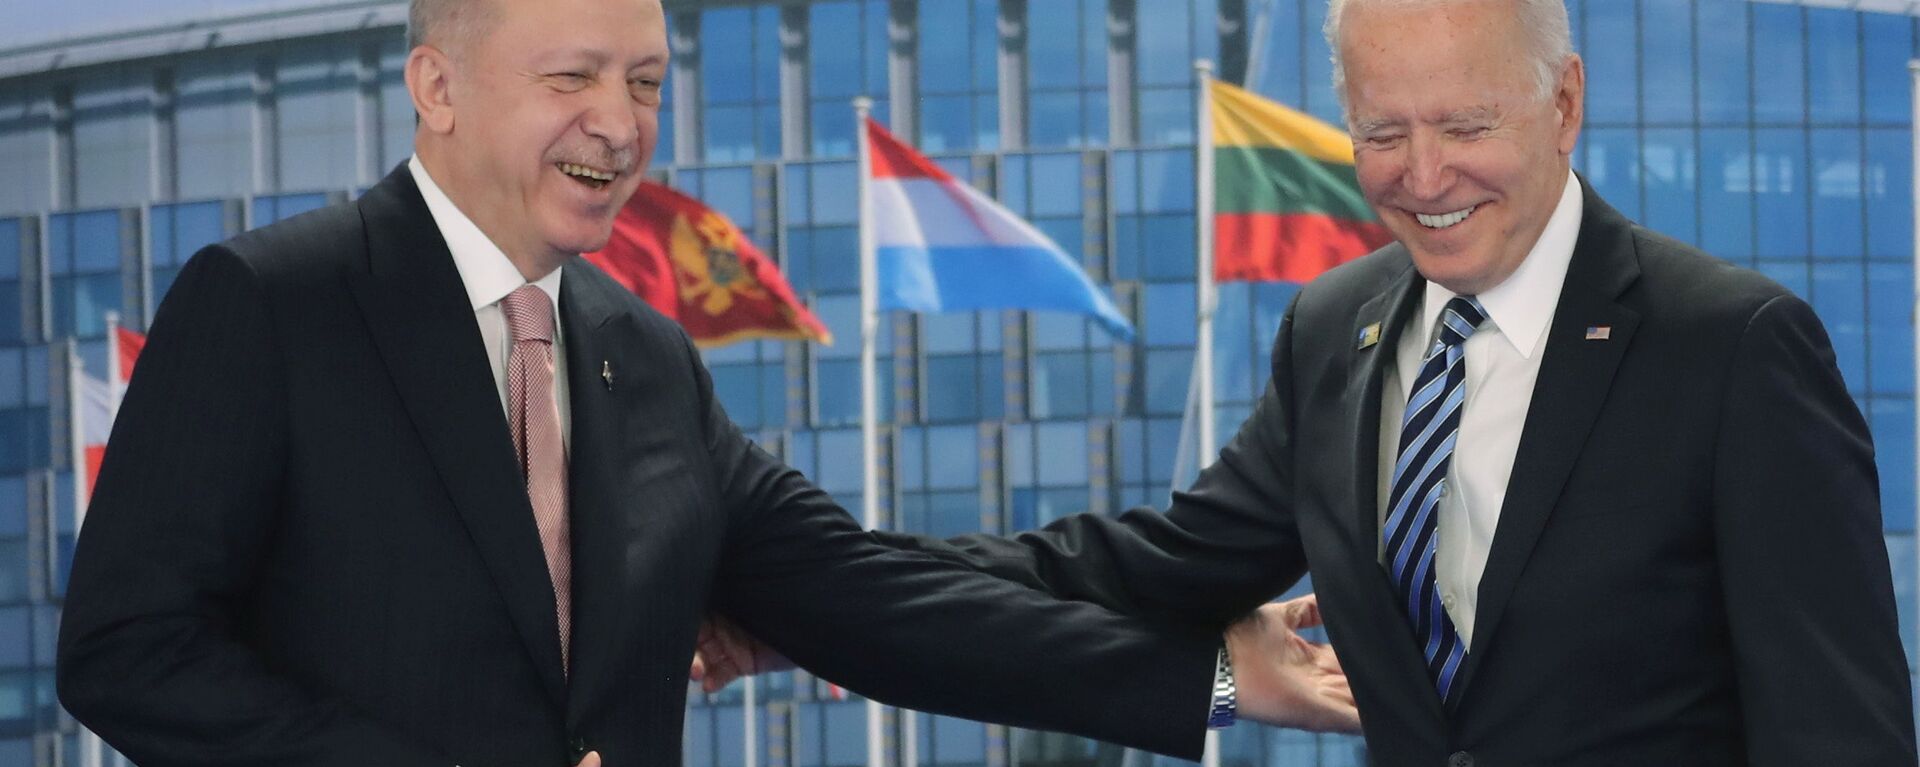 Turkish President Tayyip Erdogan meets with U.S. President Joe Biden on the sidelines of the NATO summit in Brussels, Belgium June 14, 2021. - Sputnik International, 1920, 15.06.2021